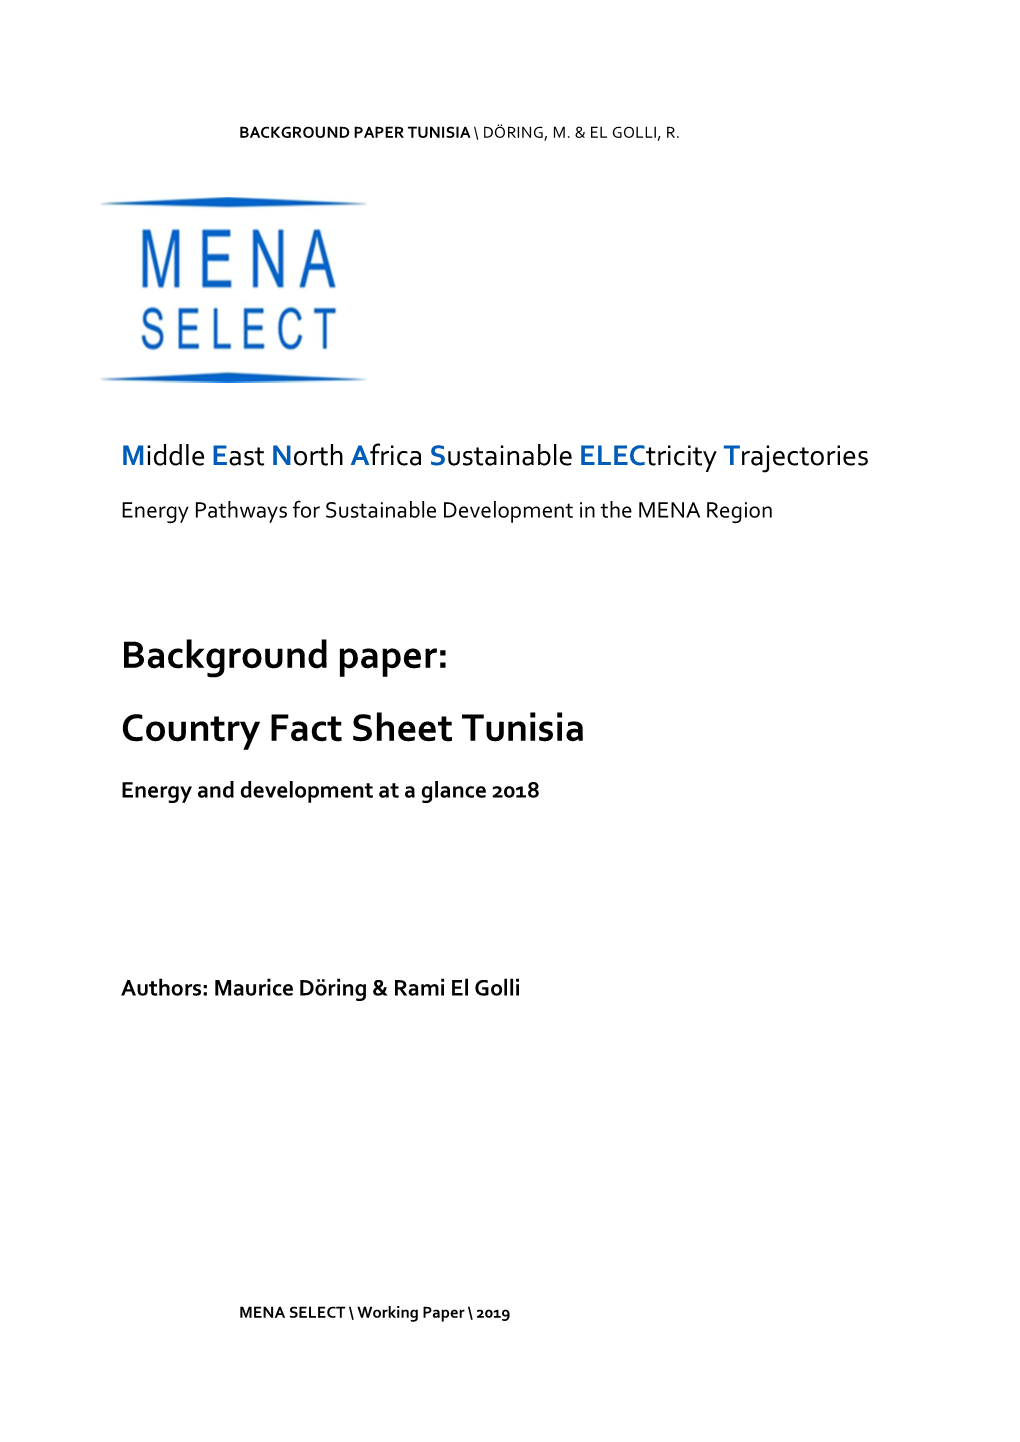 Country Fact Sheet Tunisia